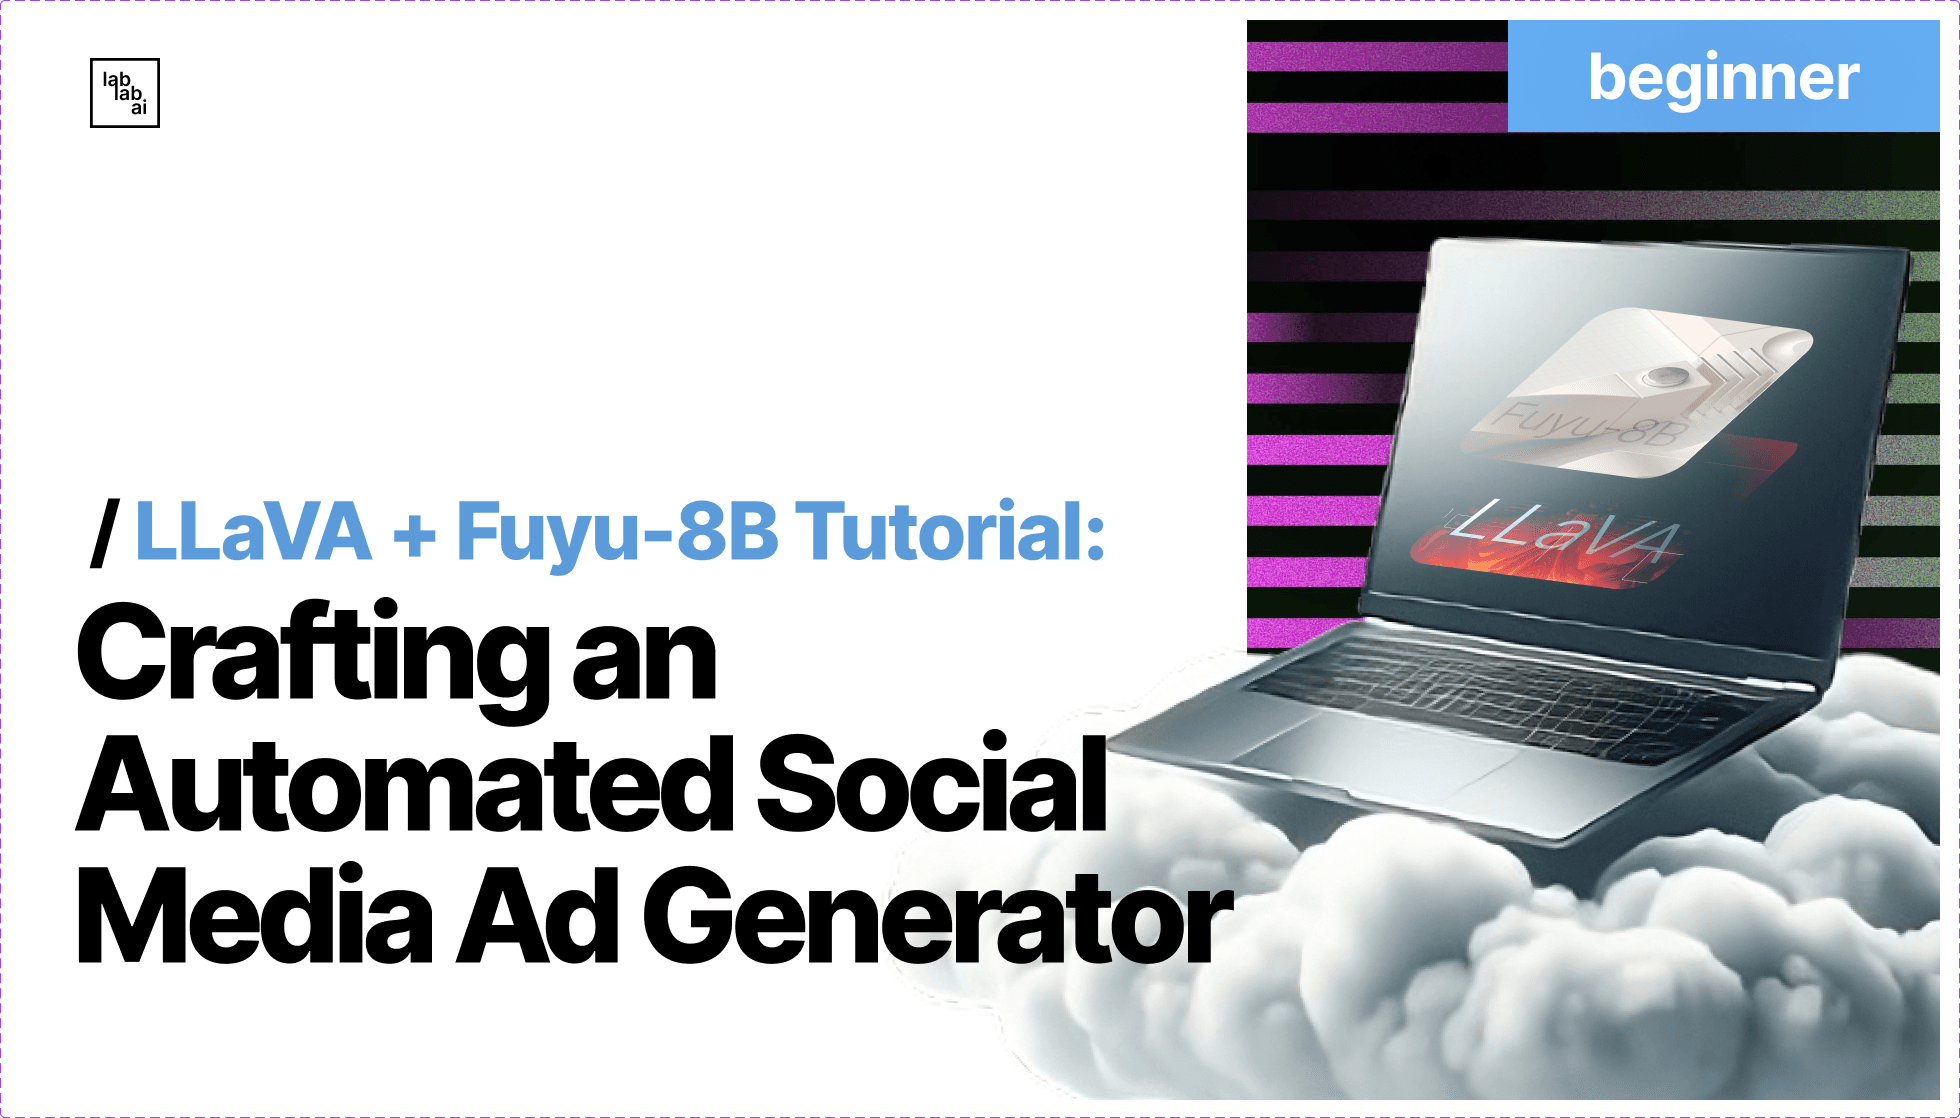 LLaVA + Fuyu-8B Integration Tutorial: Crafting an Automated Social Media Ad Generator